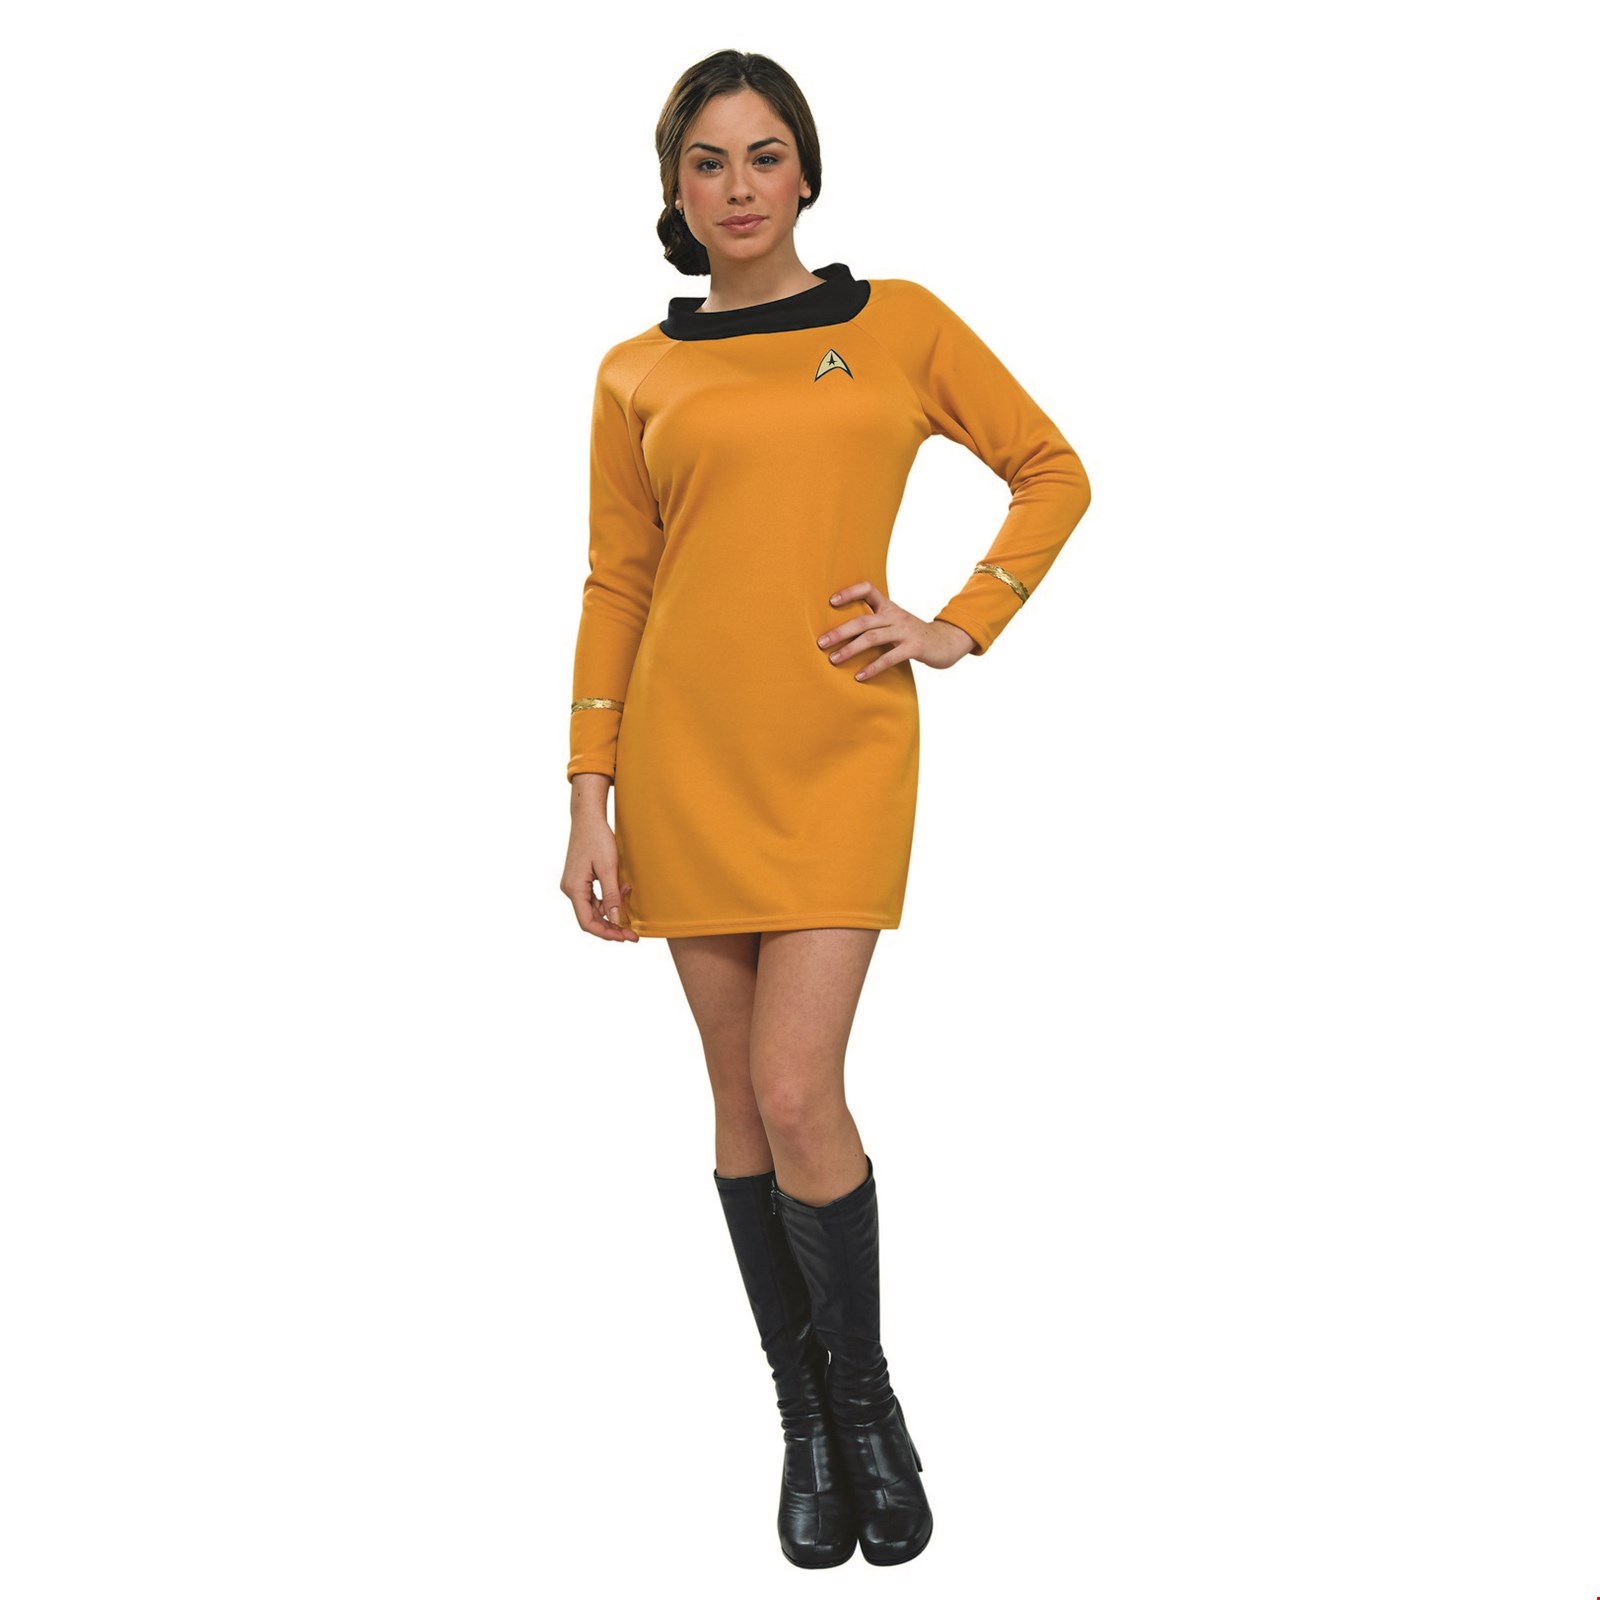 Star Trek Womens Deluxe Command Uniform Costume - image 1 of 4